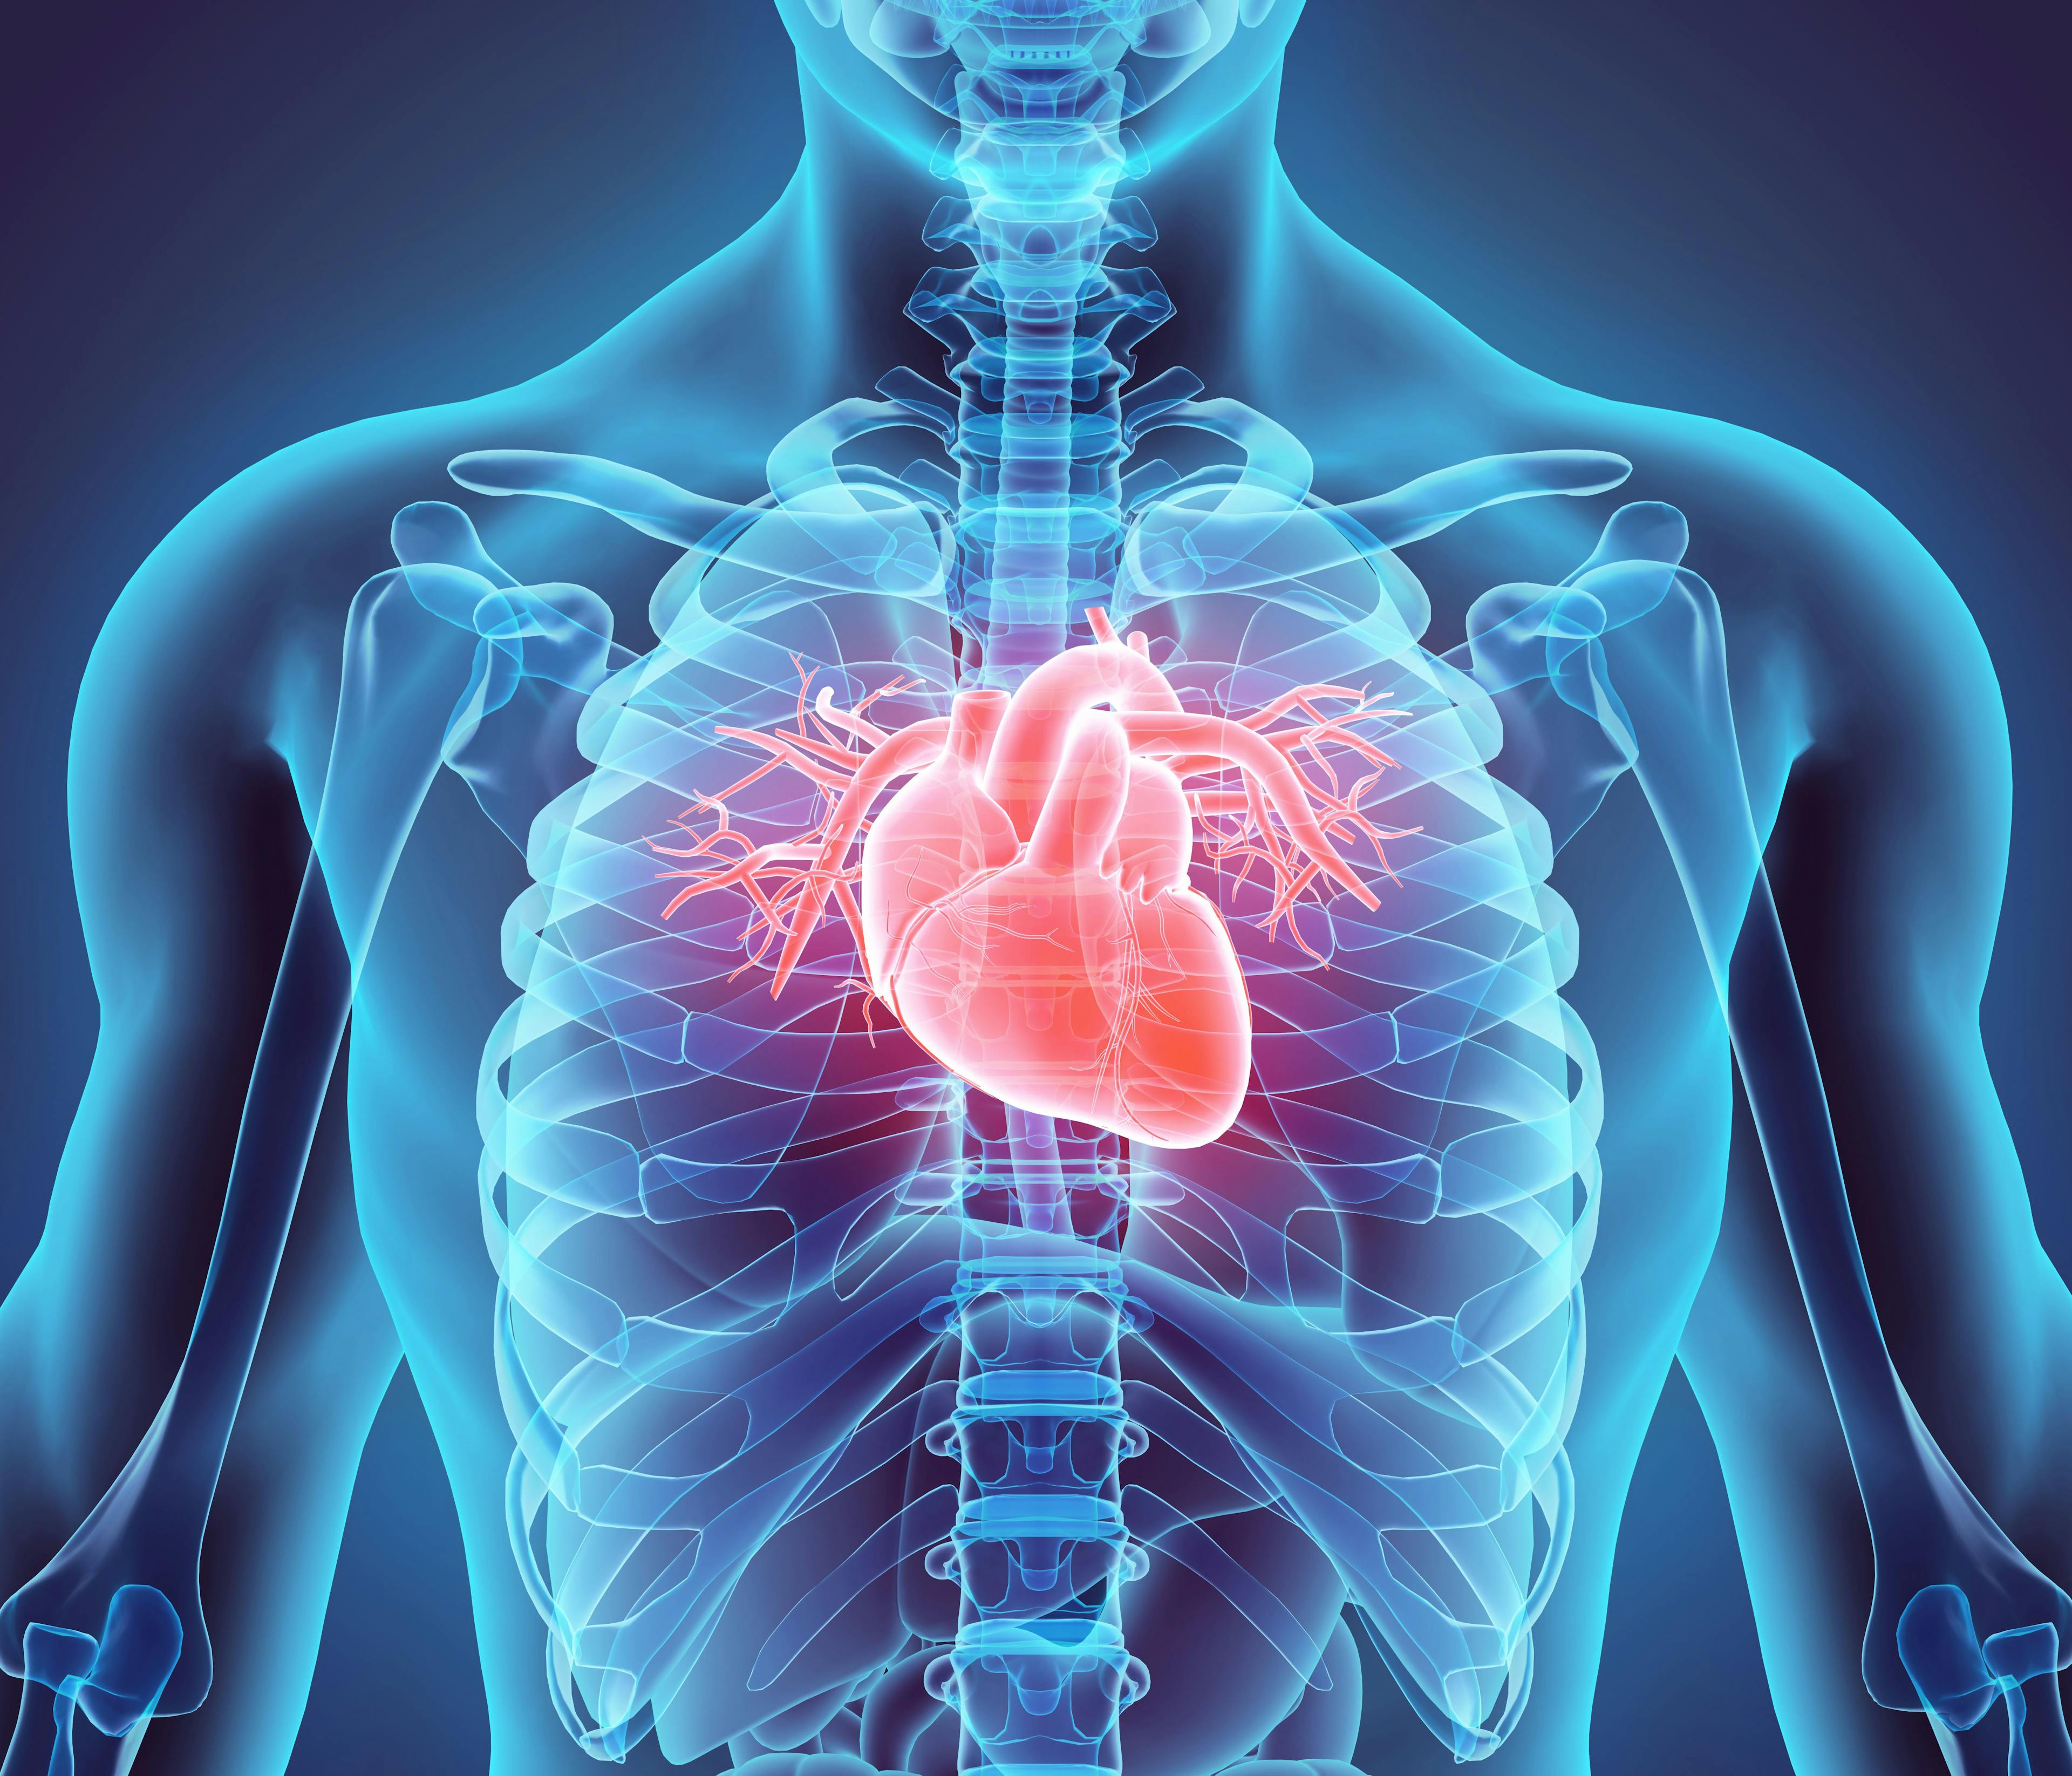 Heart animation | Image Credit: yodiyim - stock.adobe.com